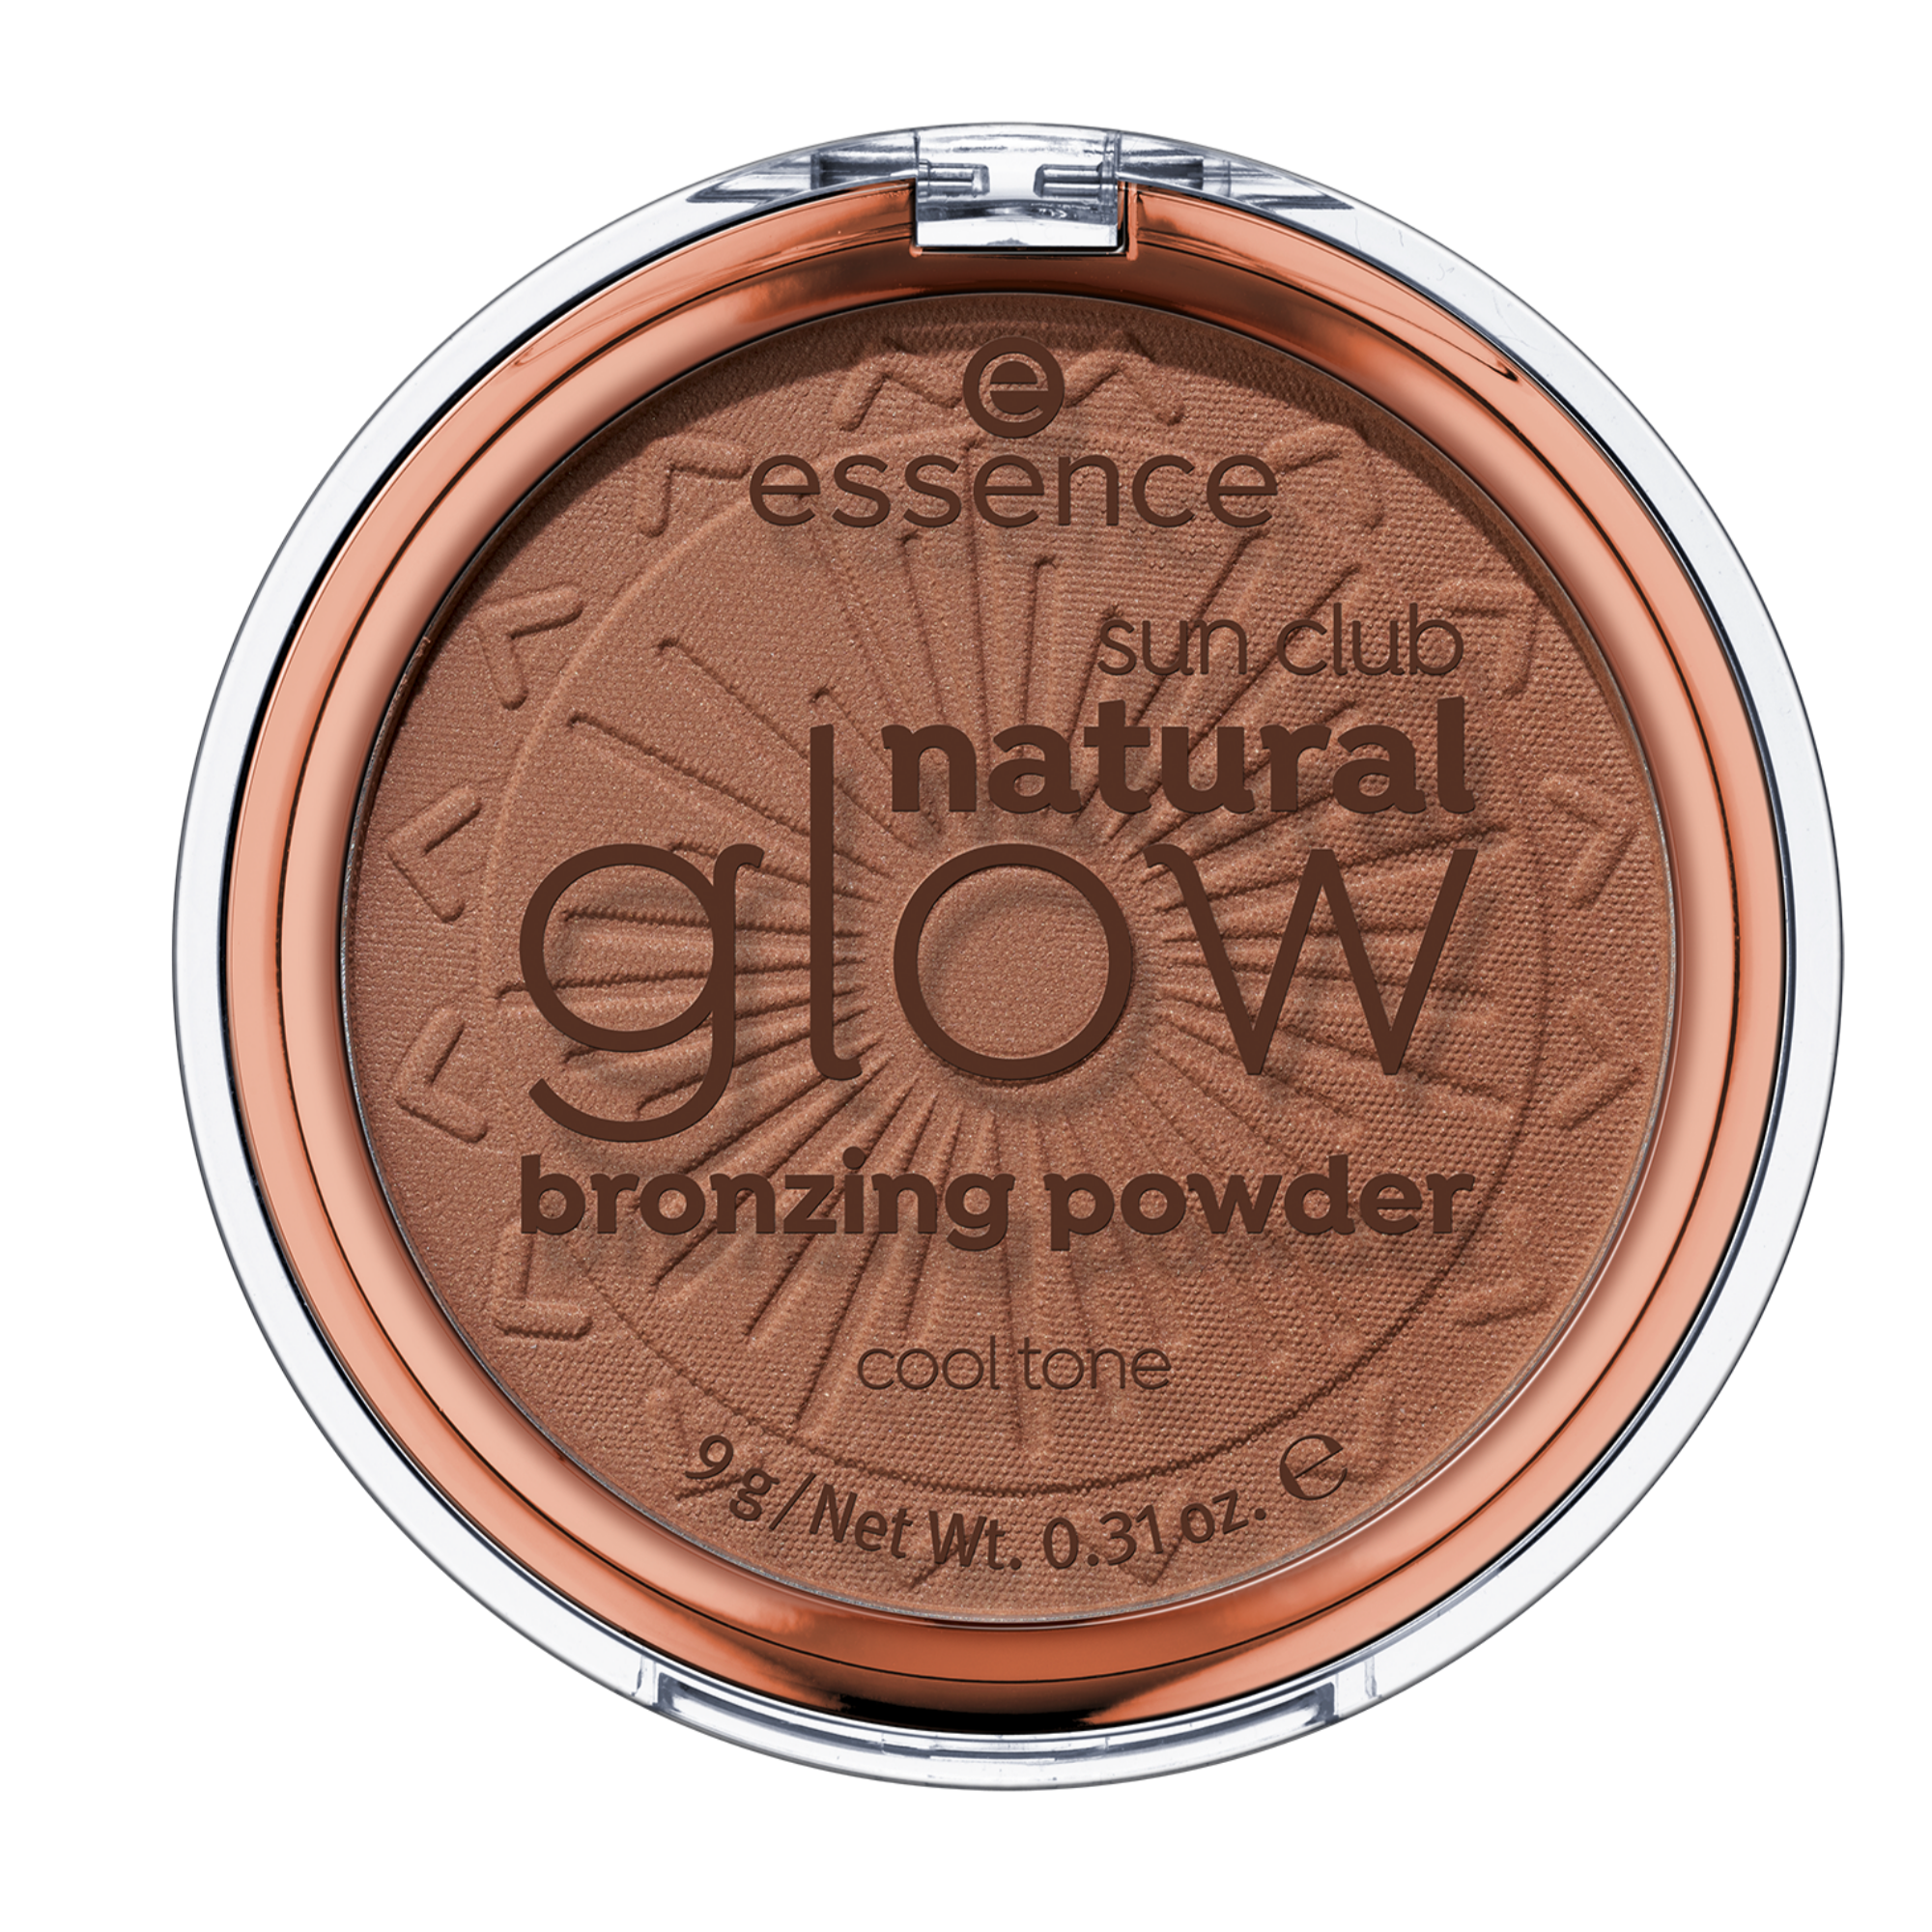 sun club natural glow bronzing powder